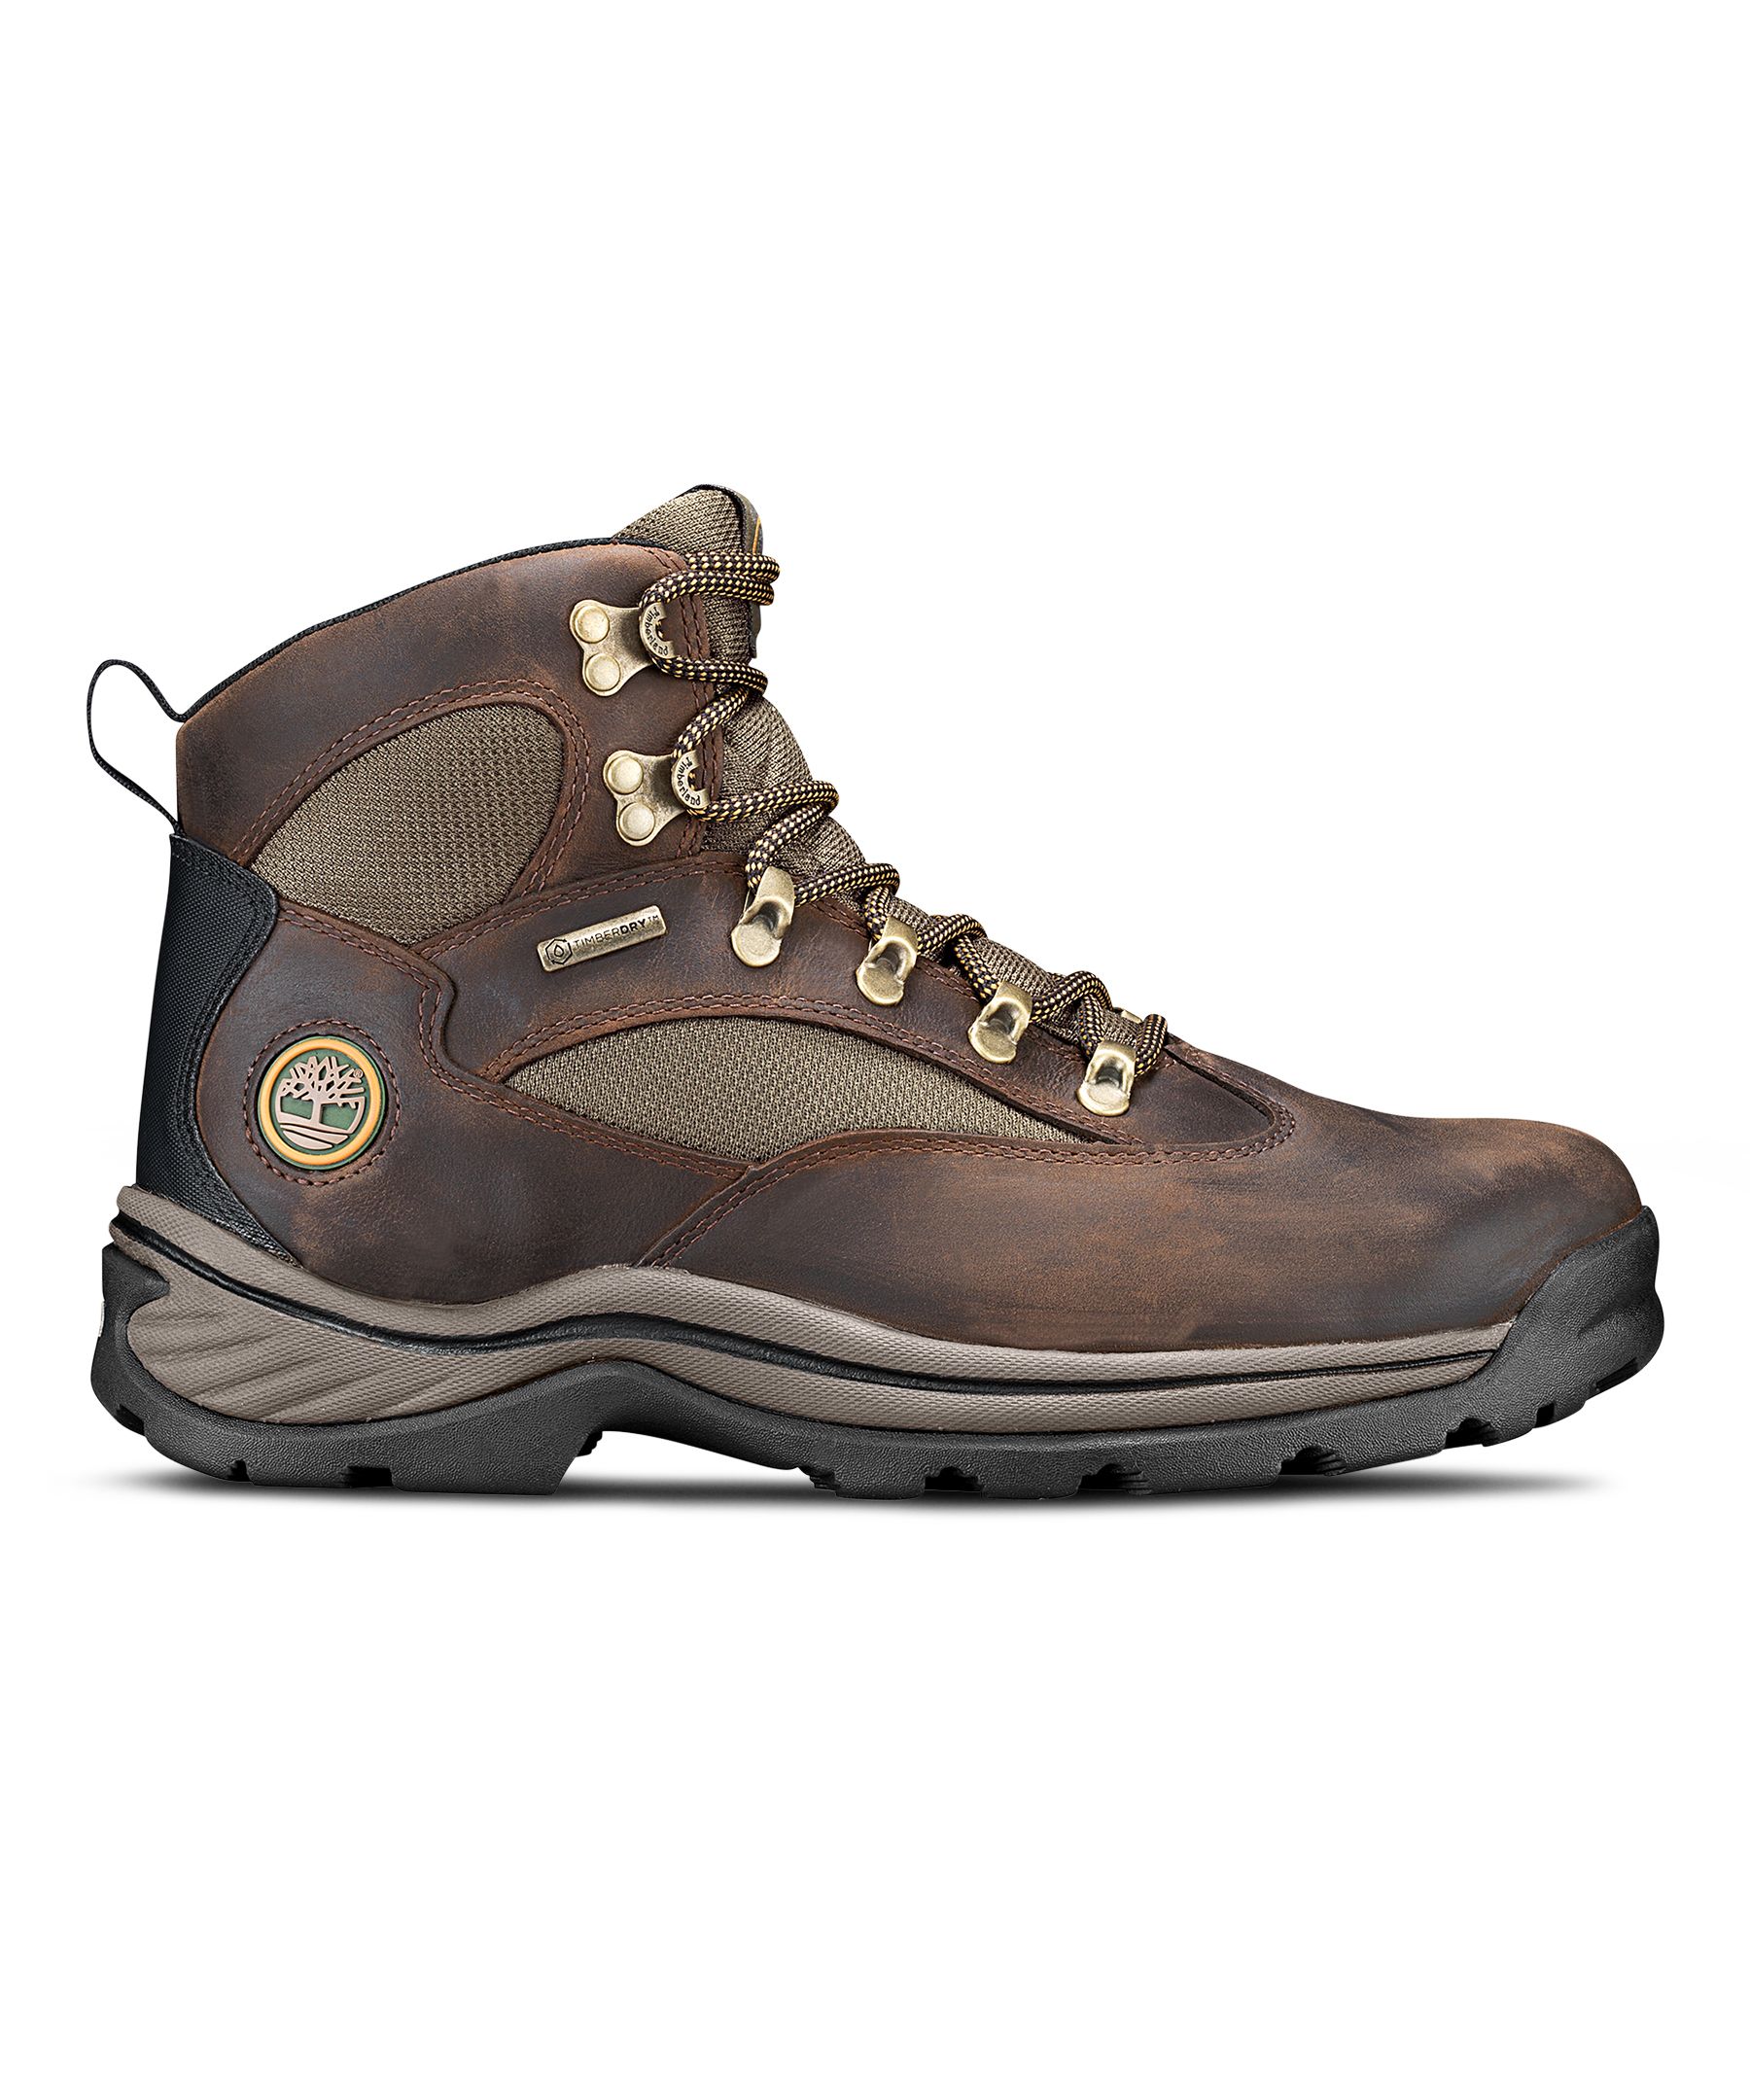 Timberland Men's Chocorua Trail Mid Waterproof Hiking Boots Sale Online ...